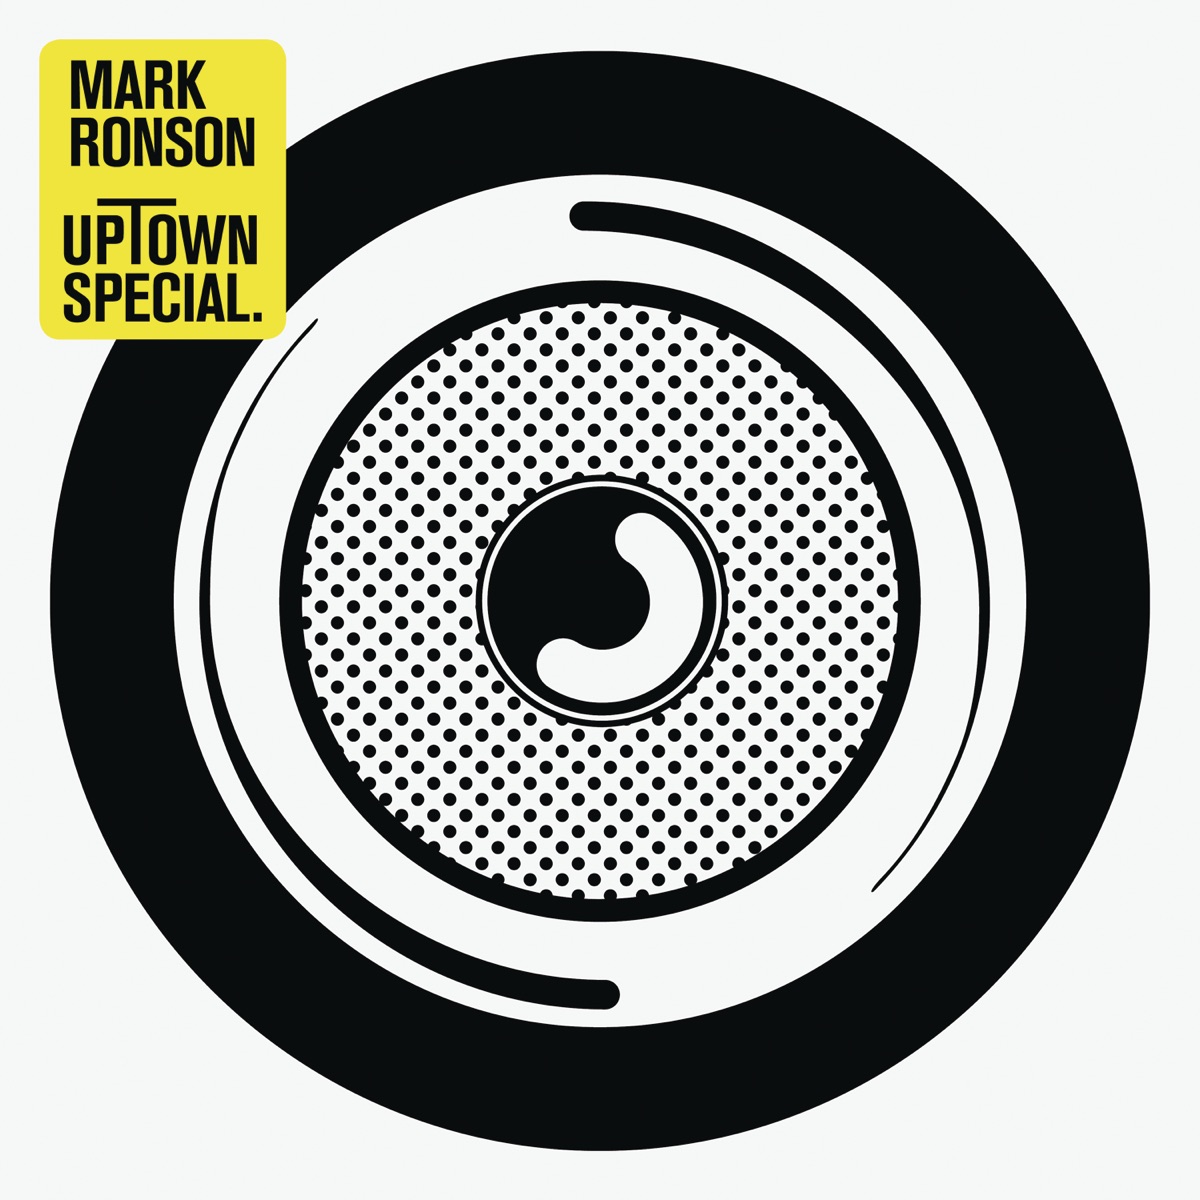 Late Night Feelings - Album by Mark Ronson - Apple Music